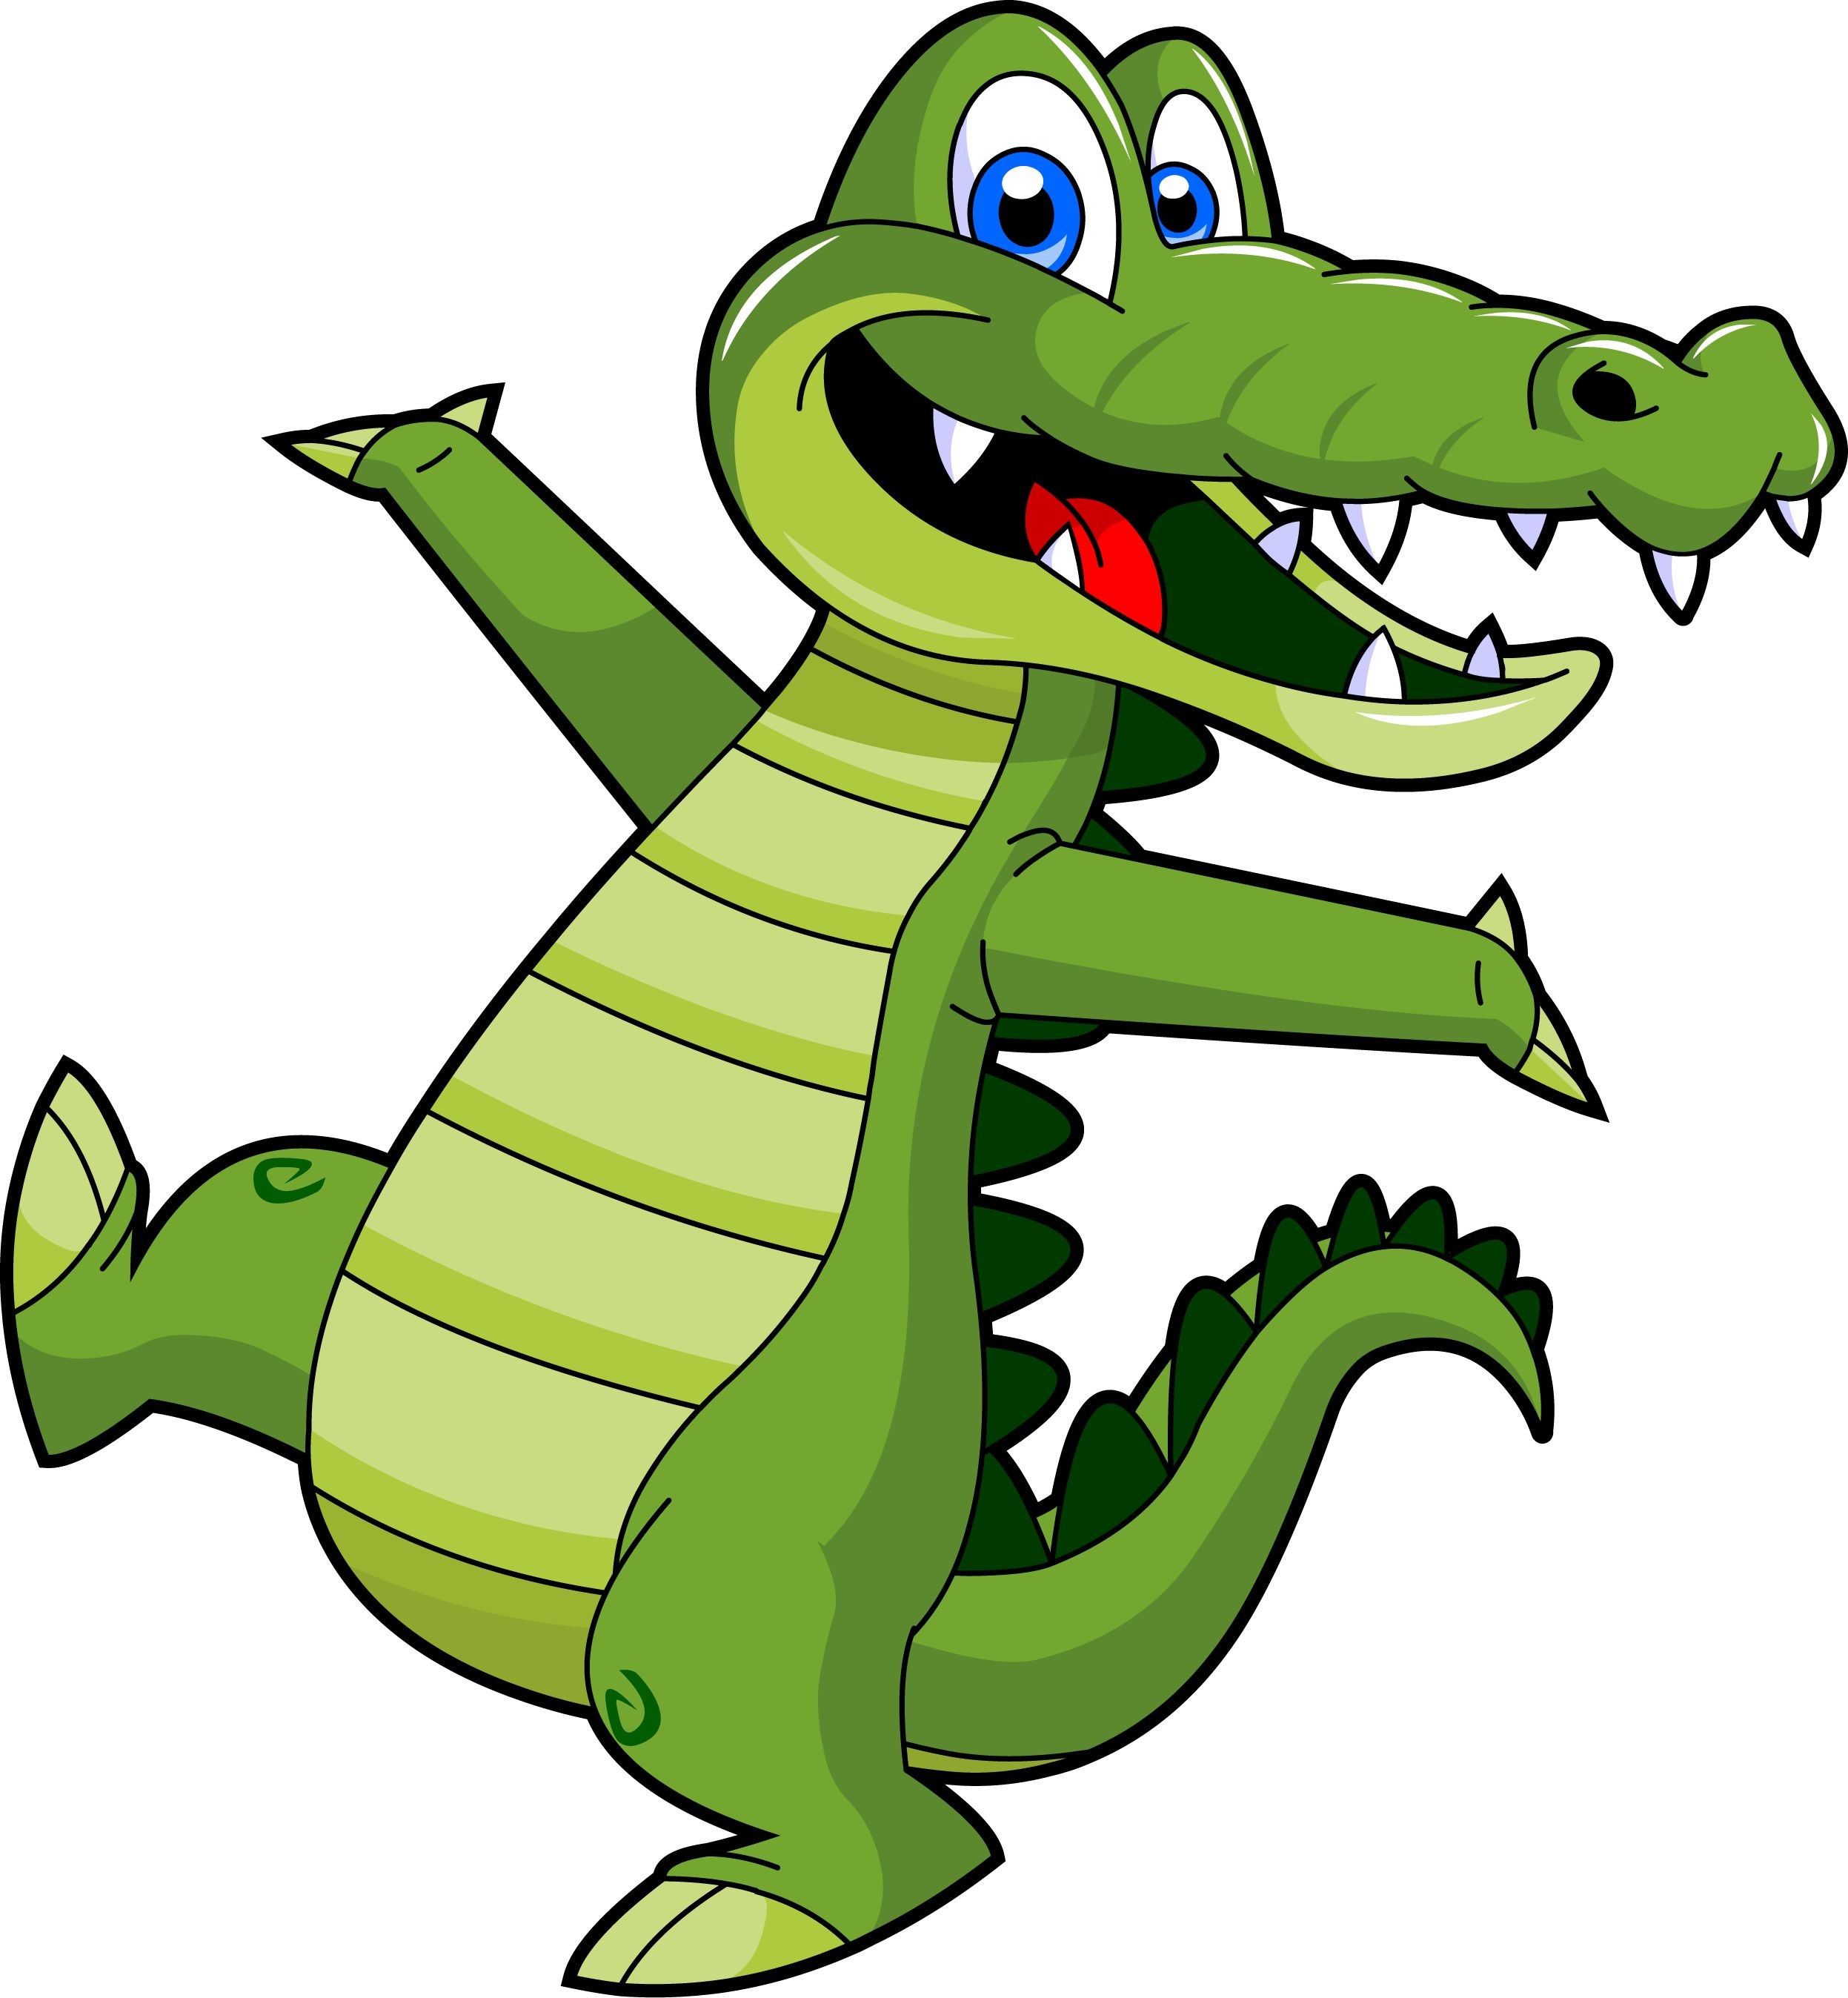 Free Cartoon Crocodile, Download Free Cartoon Crocodile png images